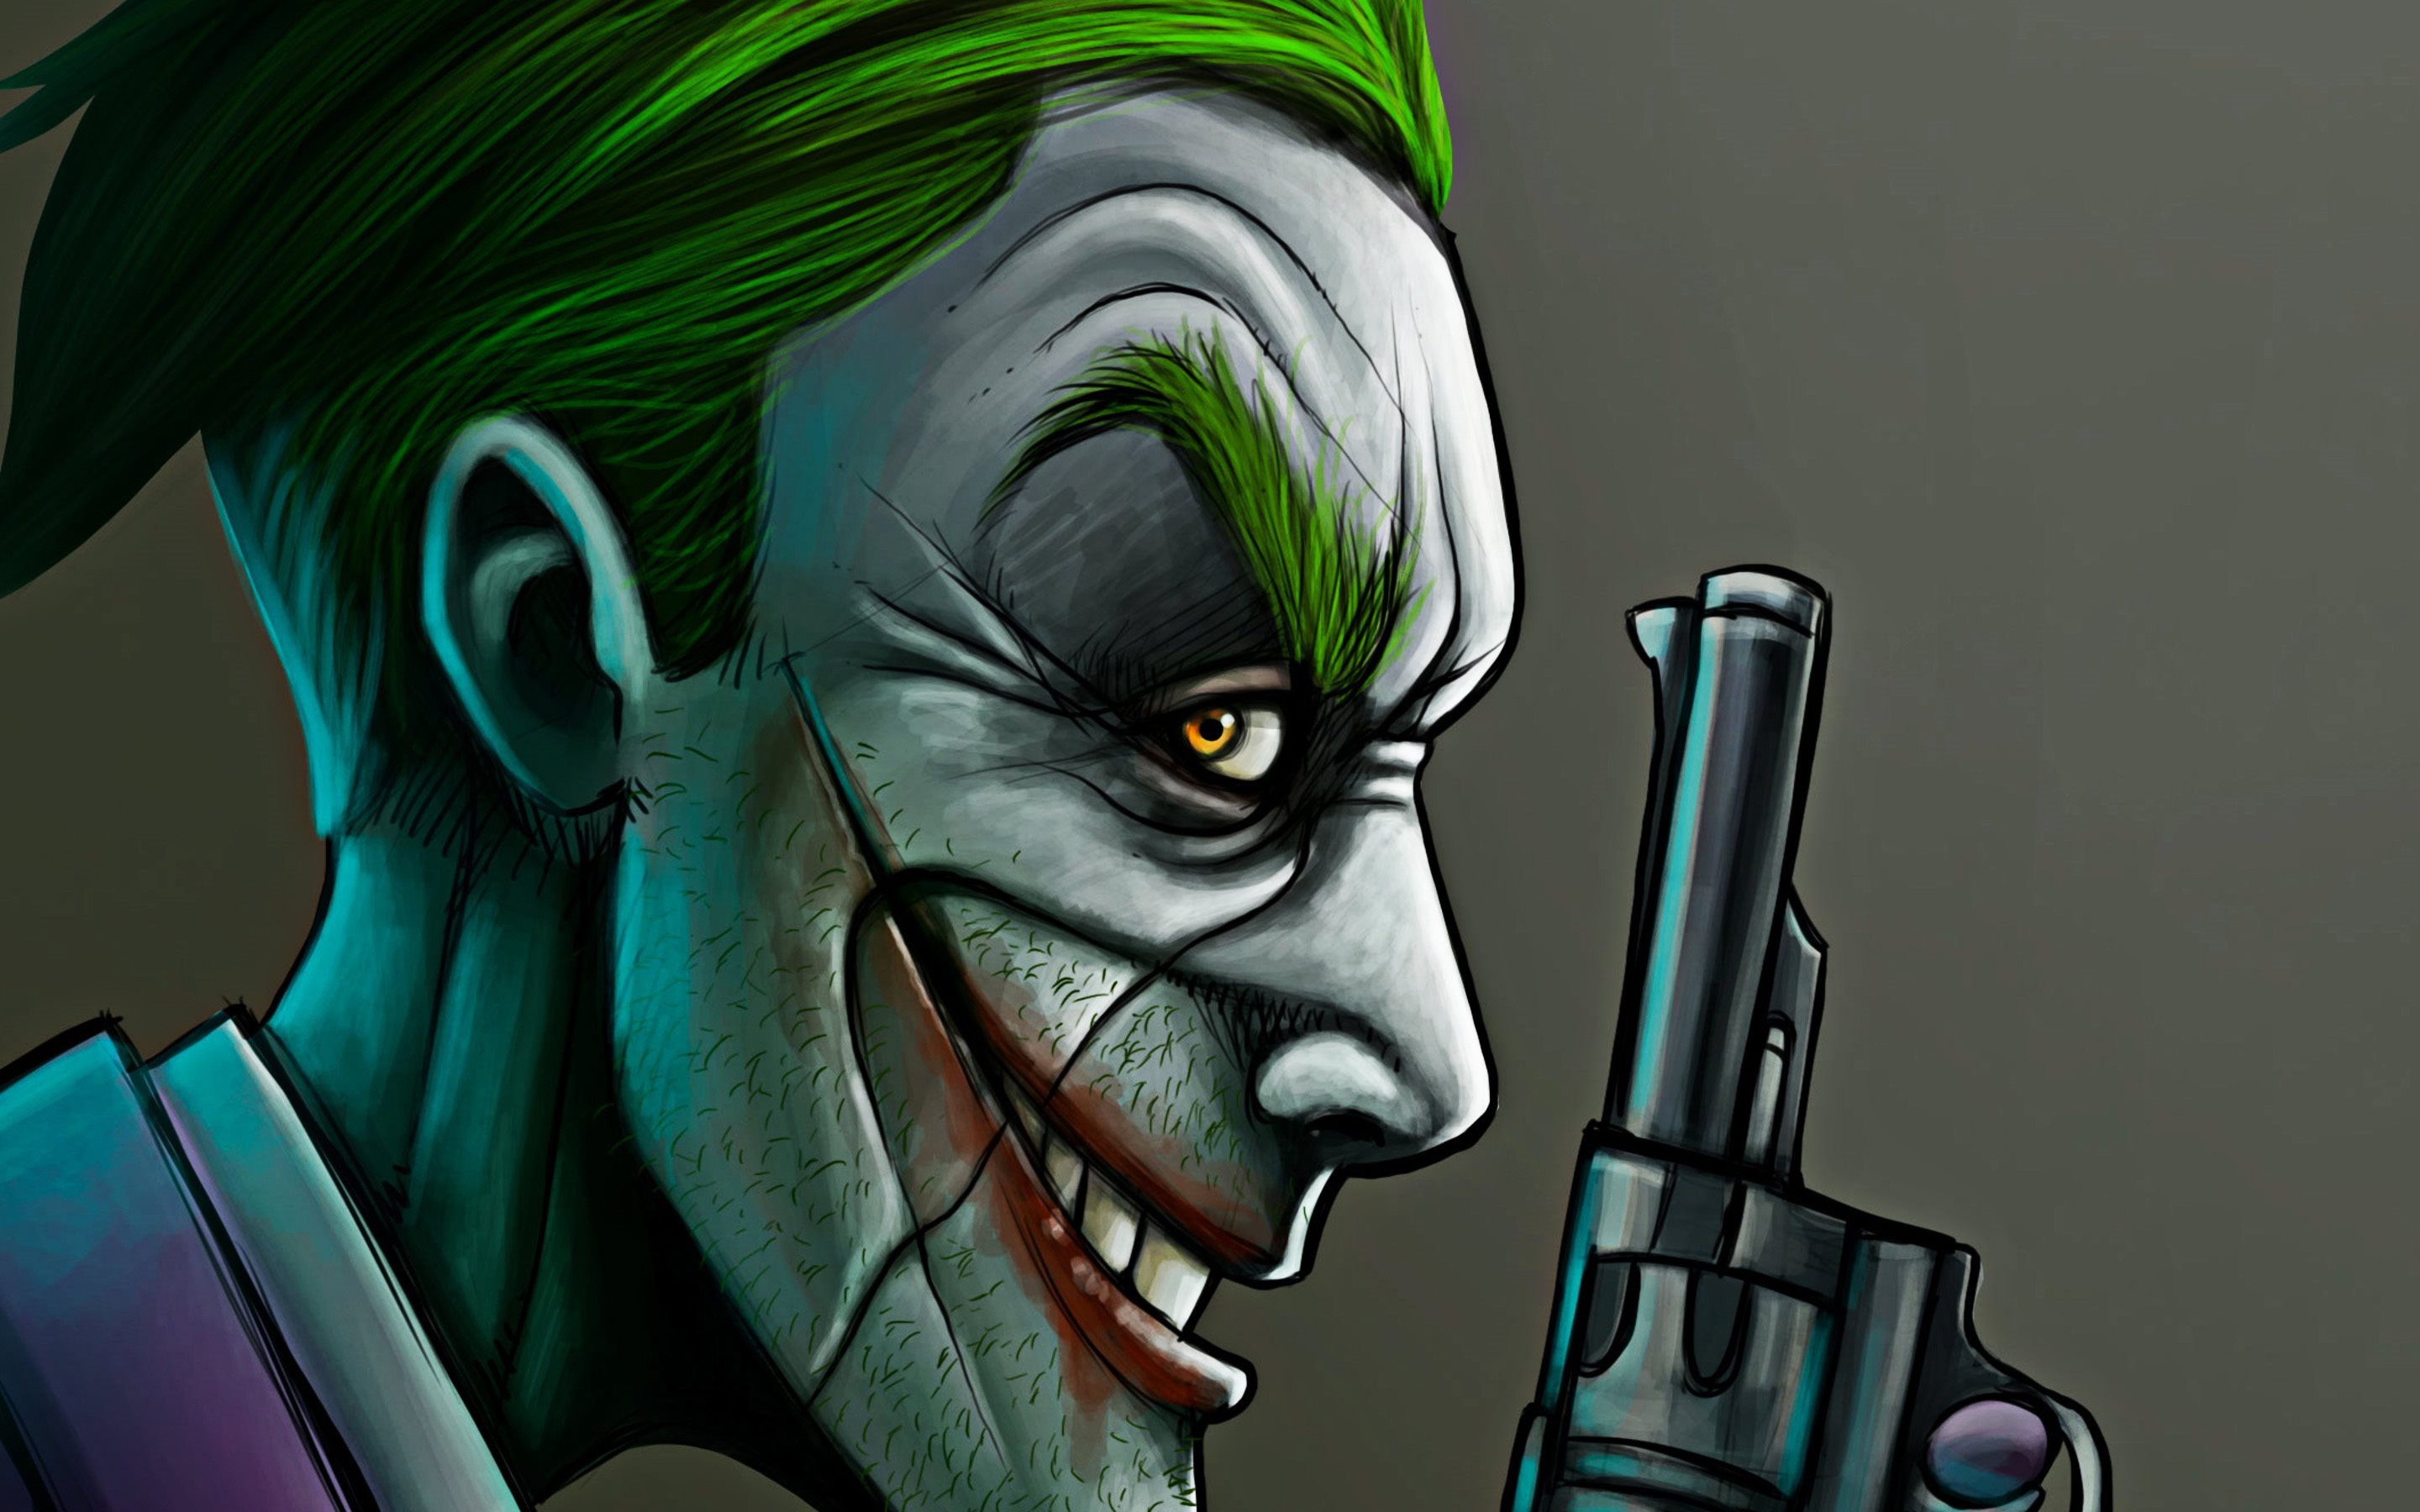 Download wallpapers joker in profile, revolver, anti-hero, joker with